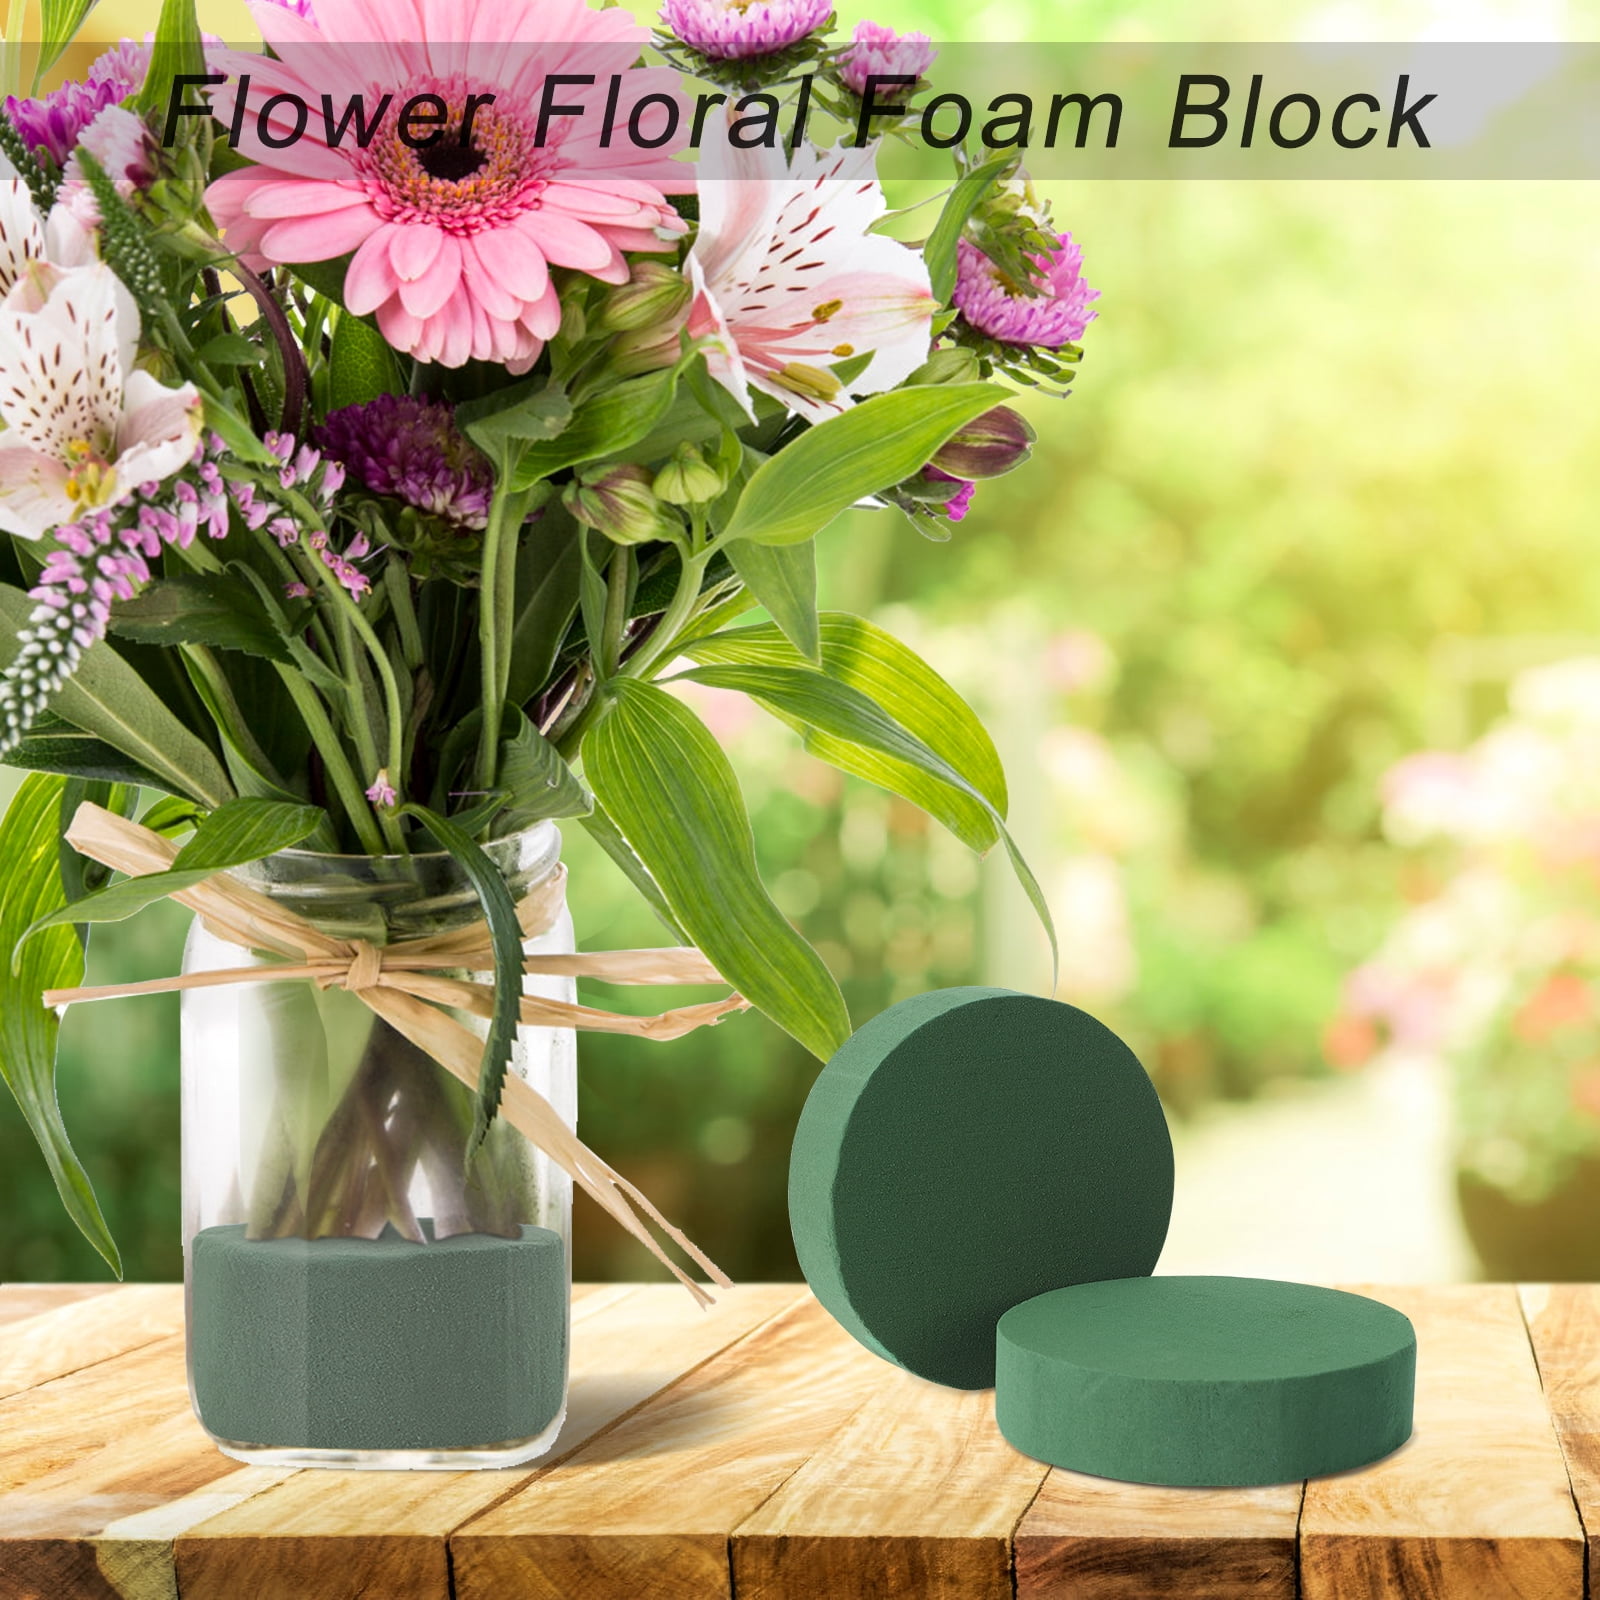 5 Pcs Floral Foam, MYYZMY 4.7 inch Dry Wet Floral Foam Bricks Round for Artificial Flowers